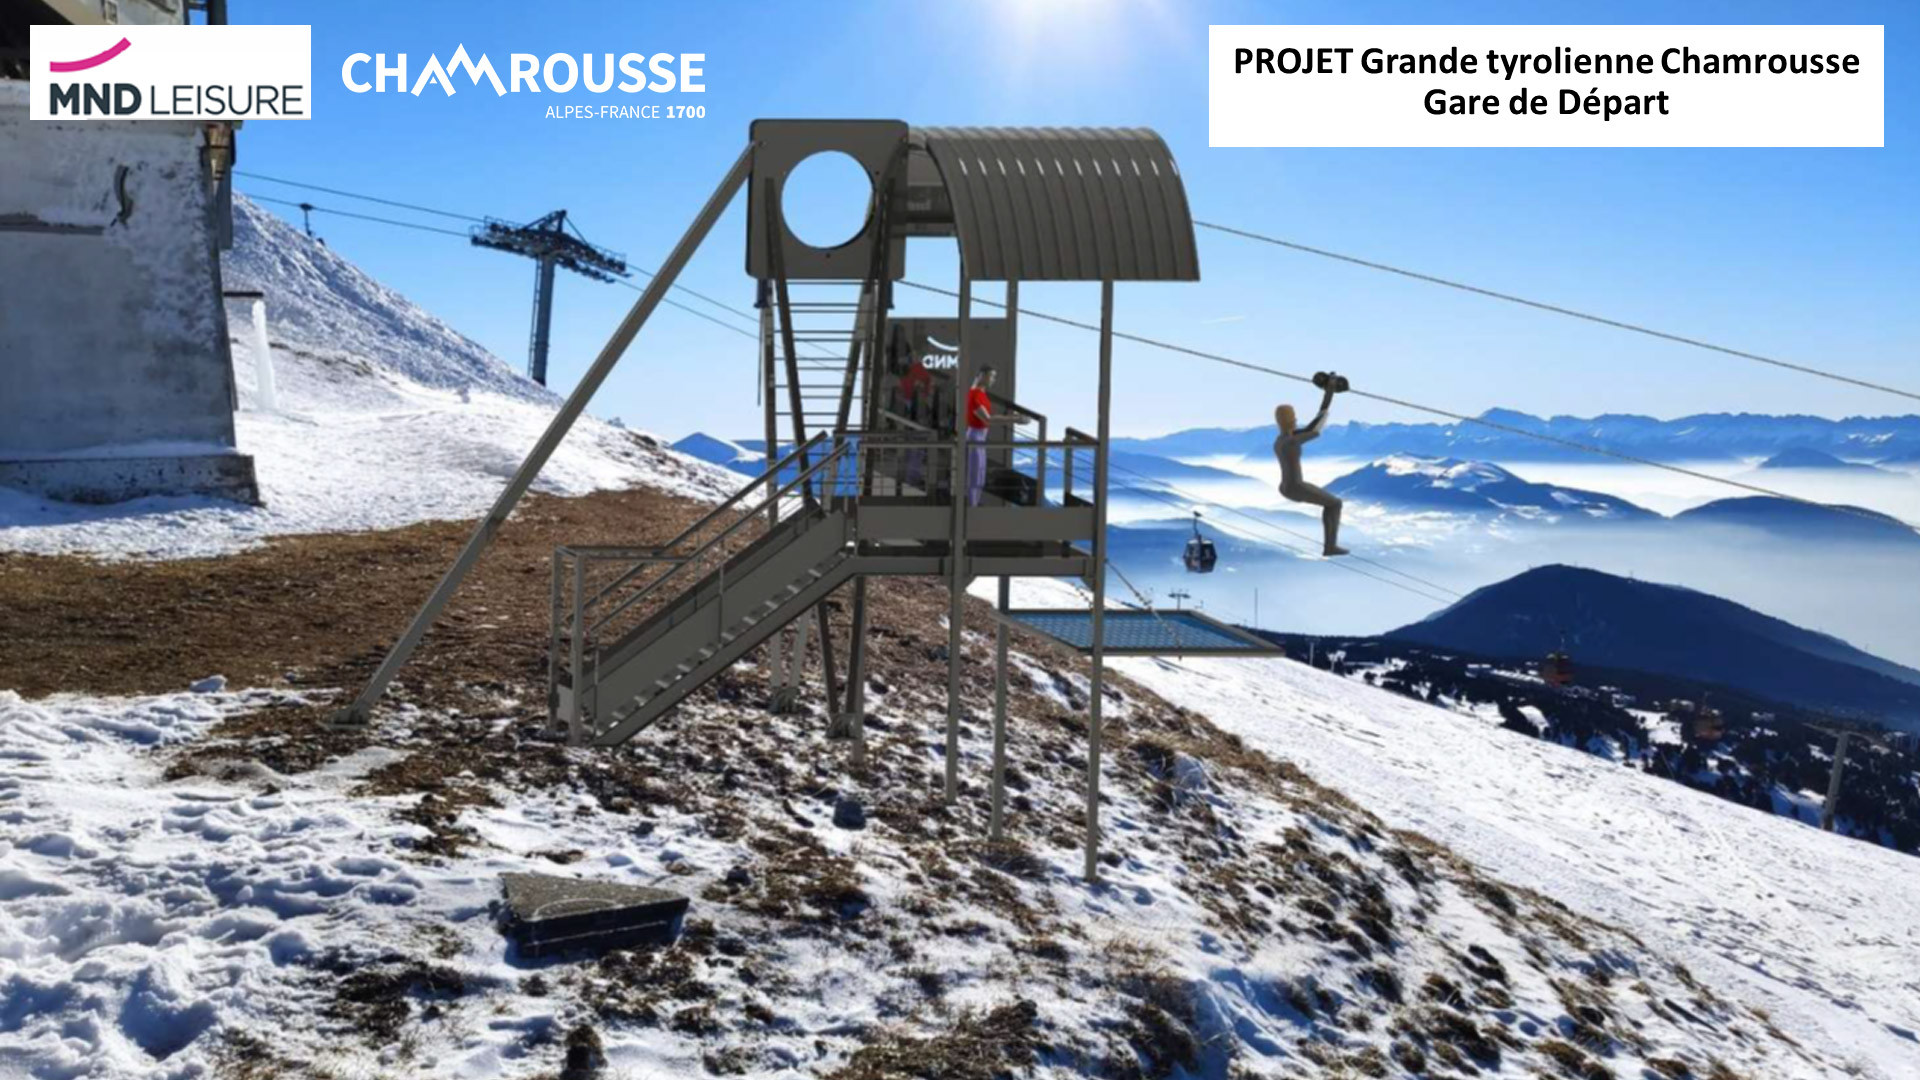 Chamrousse projet tyrolienne station montagne ski grenoble isère alpes france